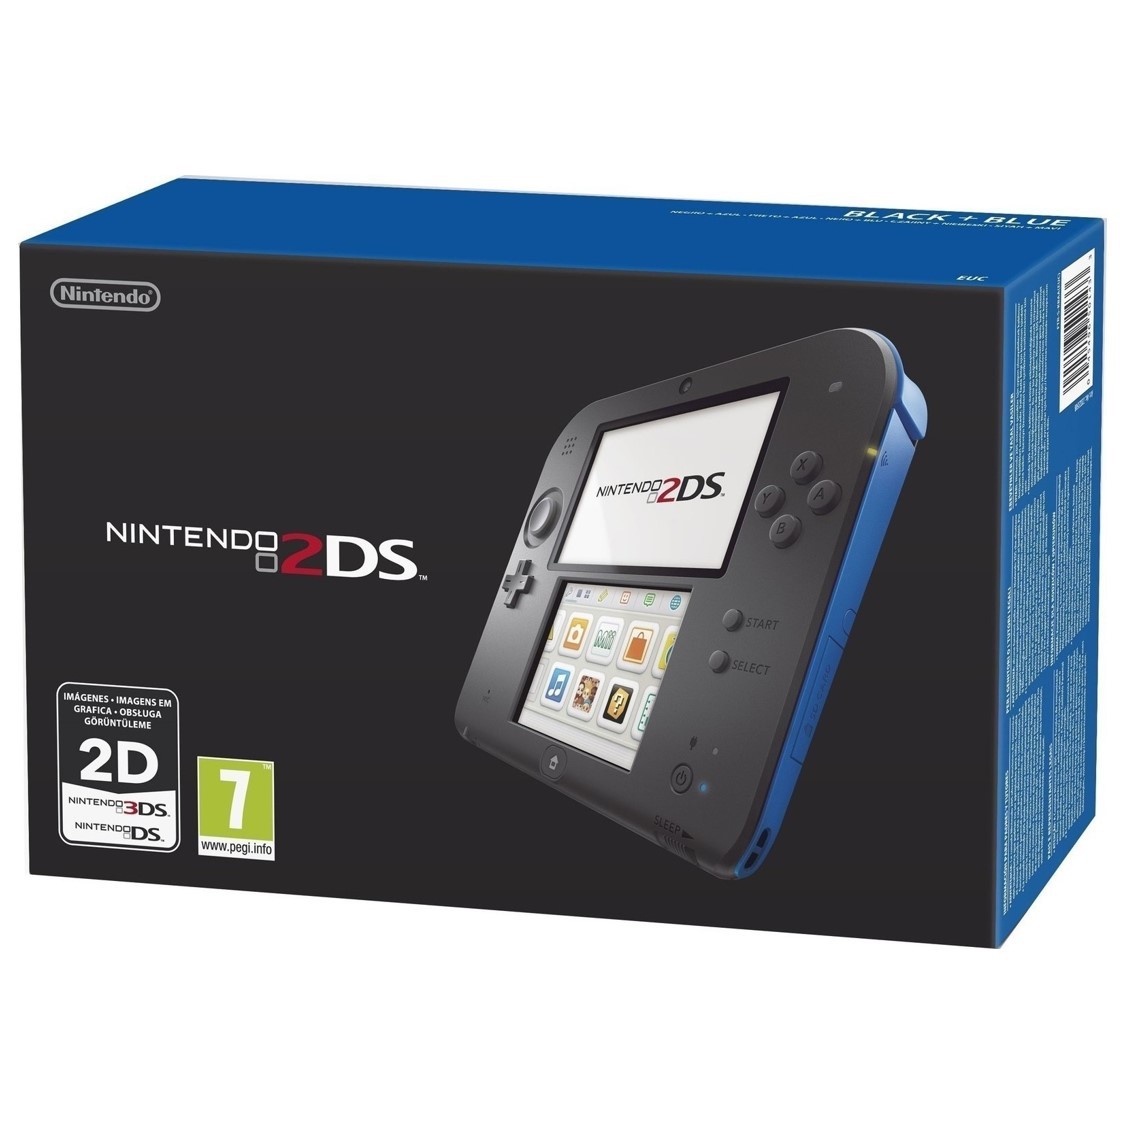 Nintendo 2DS - Black/Blue (Electric Blue) [Complete] - Nintendo 3DS Hardware